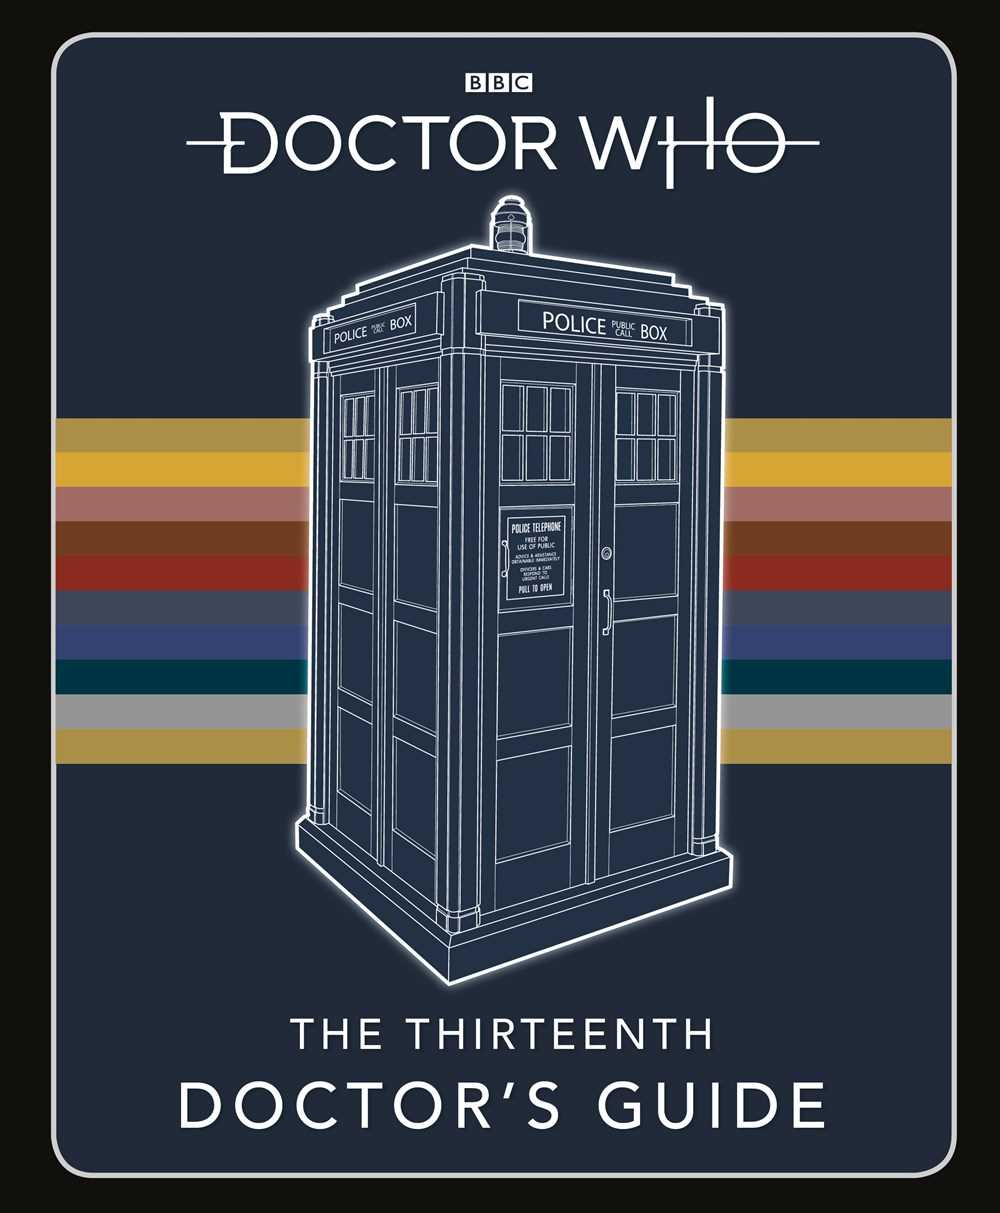 Thirteenth Doctor's Guide